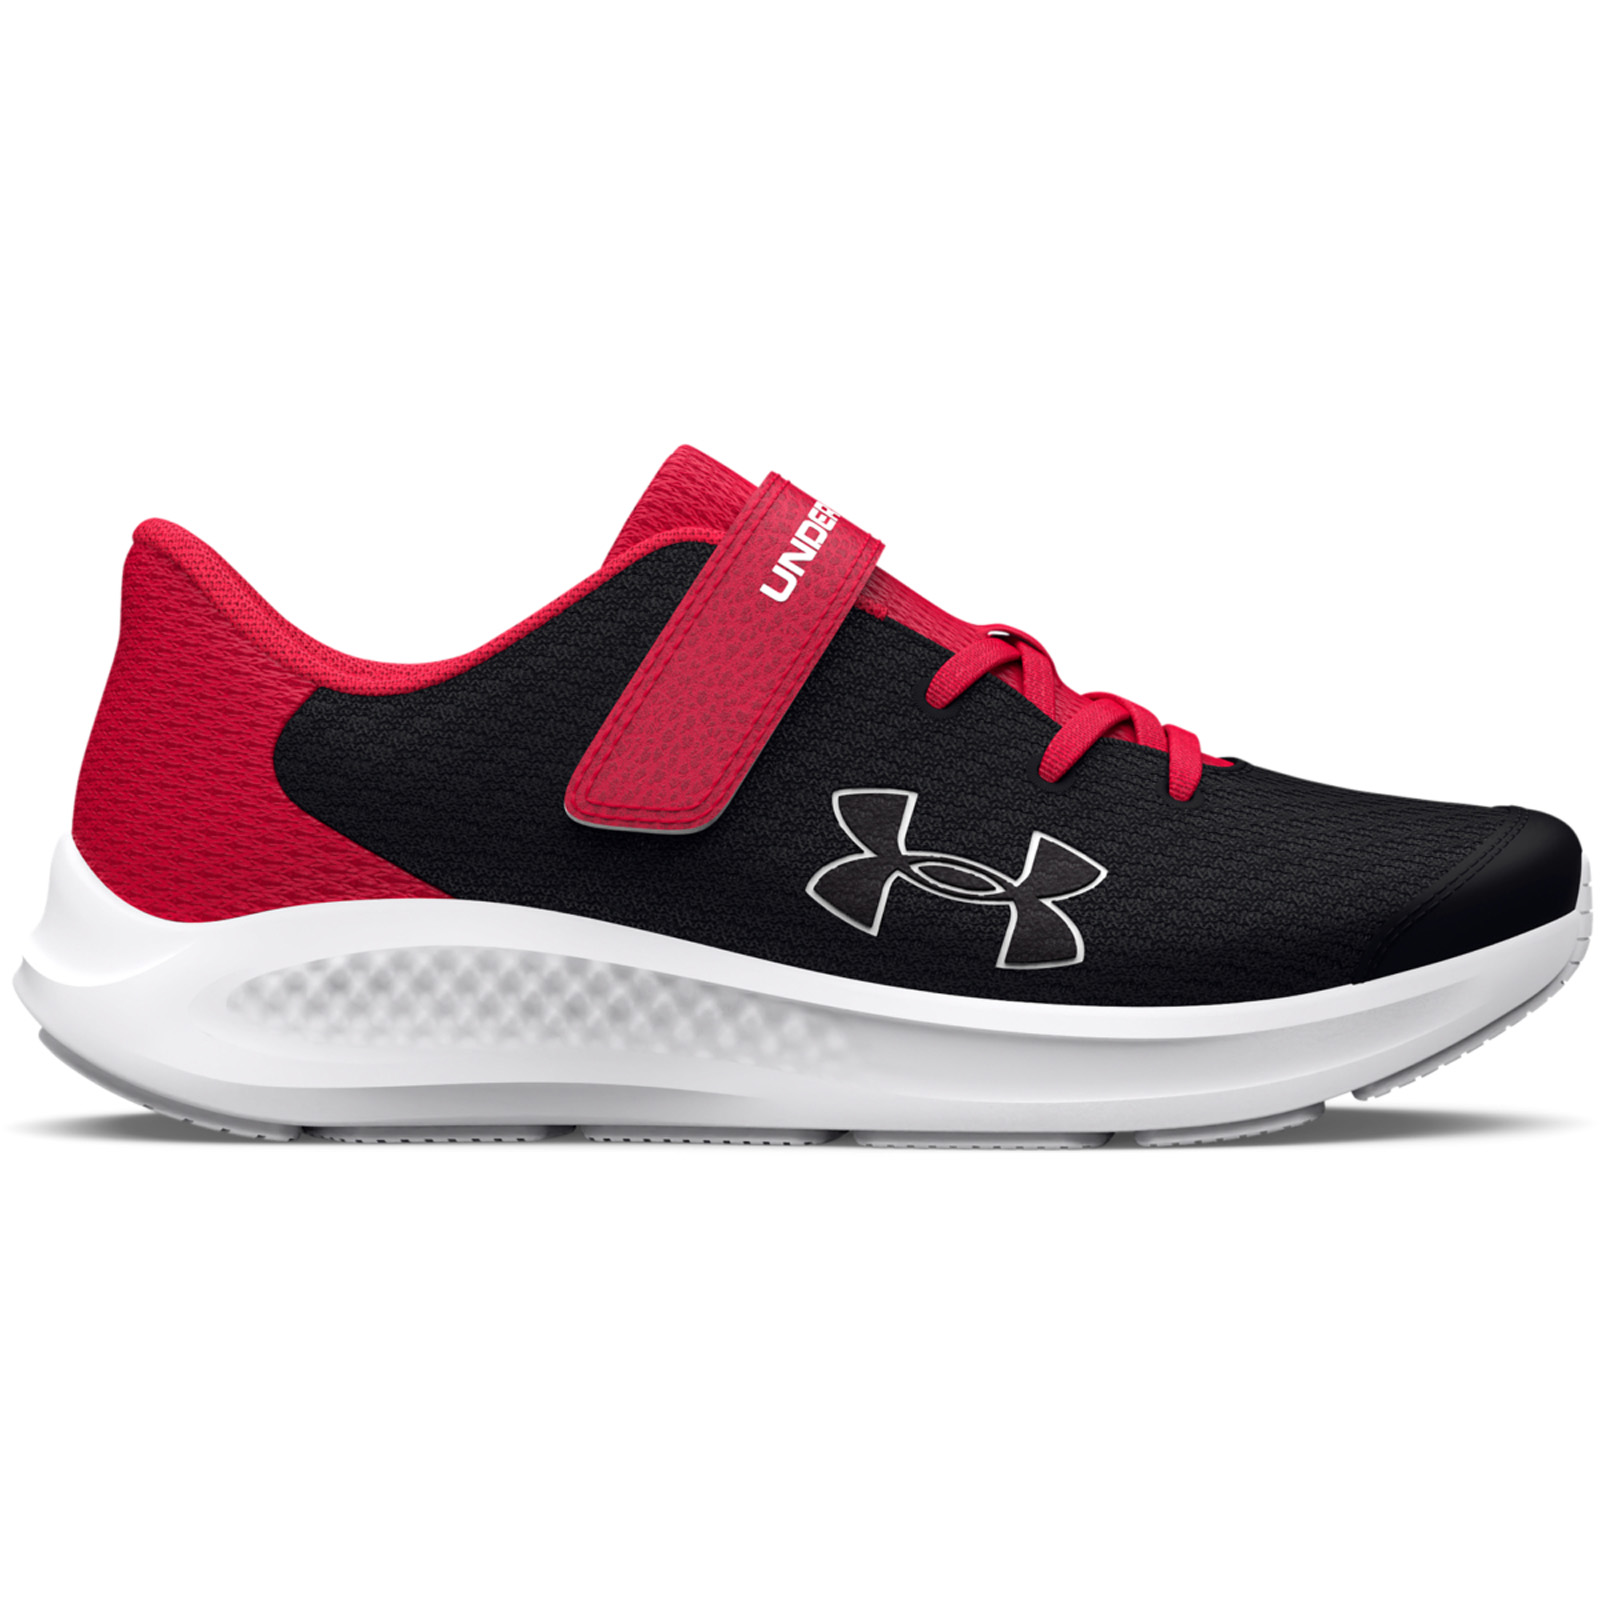 Under Armour - Boys' Pre-School UA Pursuit 3 AC Big Logo Running Shoes - Black/Red/White Παιδικά > Παπούτσια > Αθλητικά > Παπούτσι Low Cut